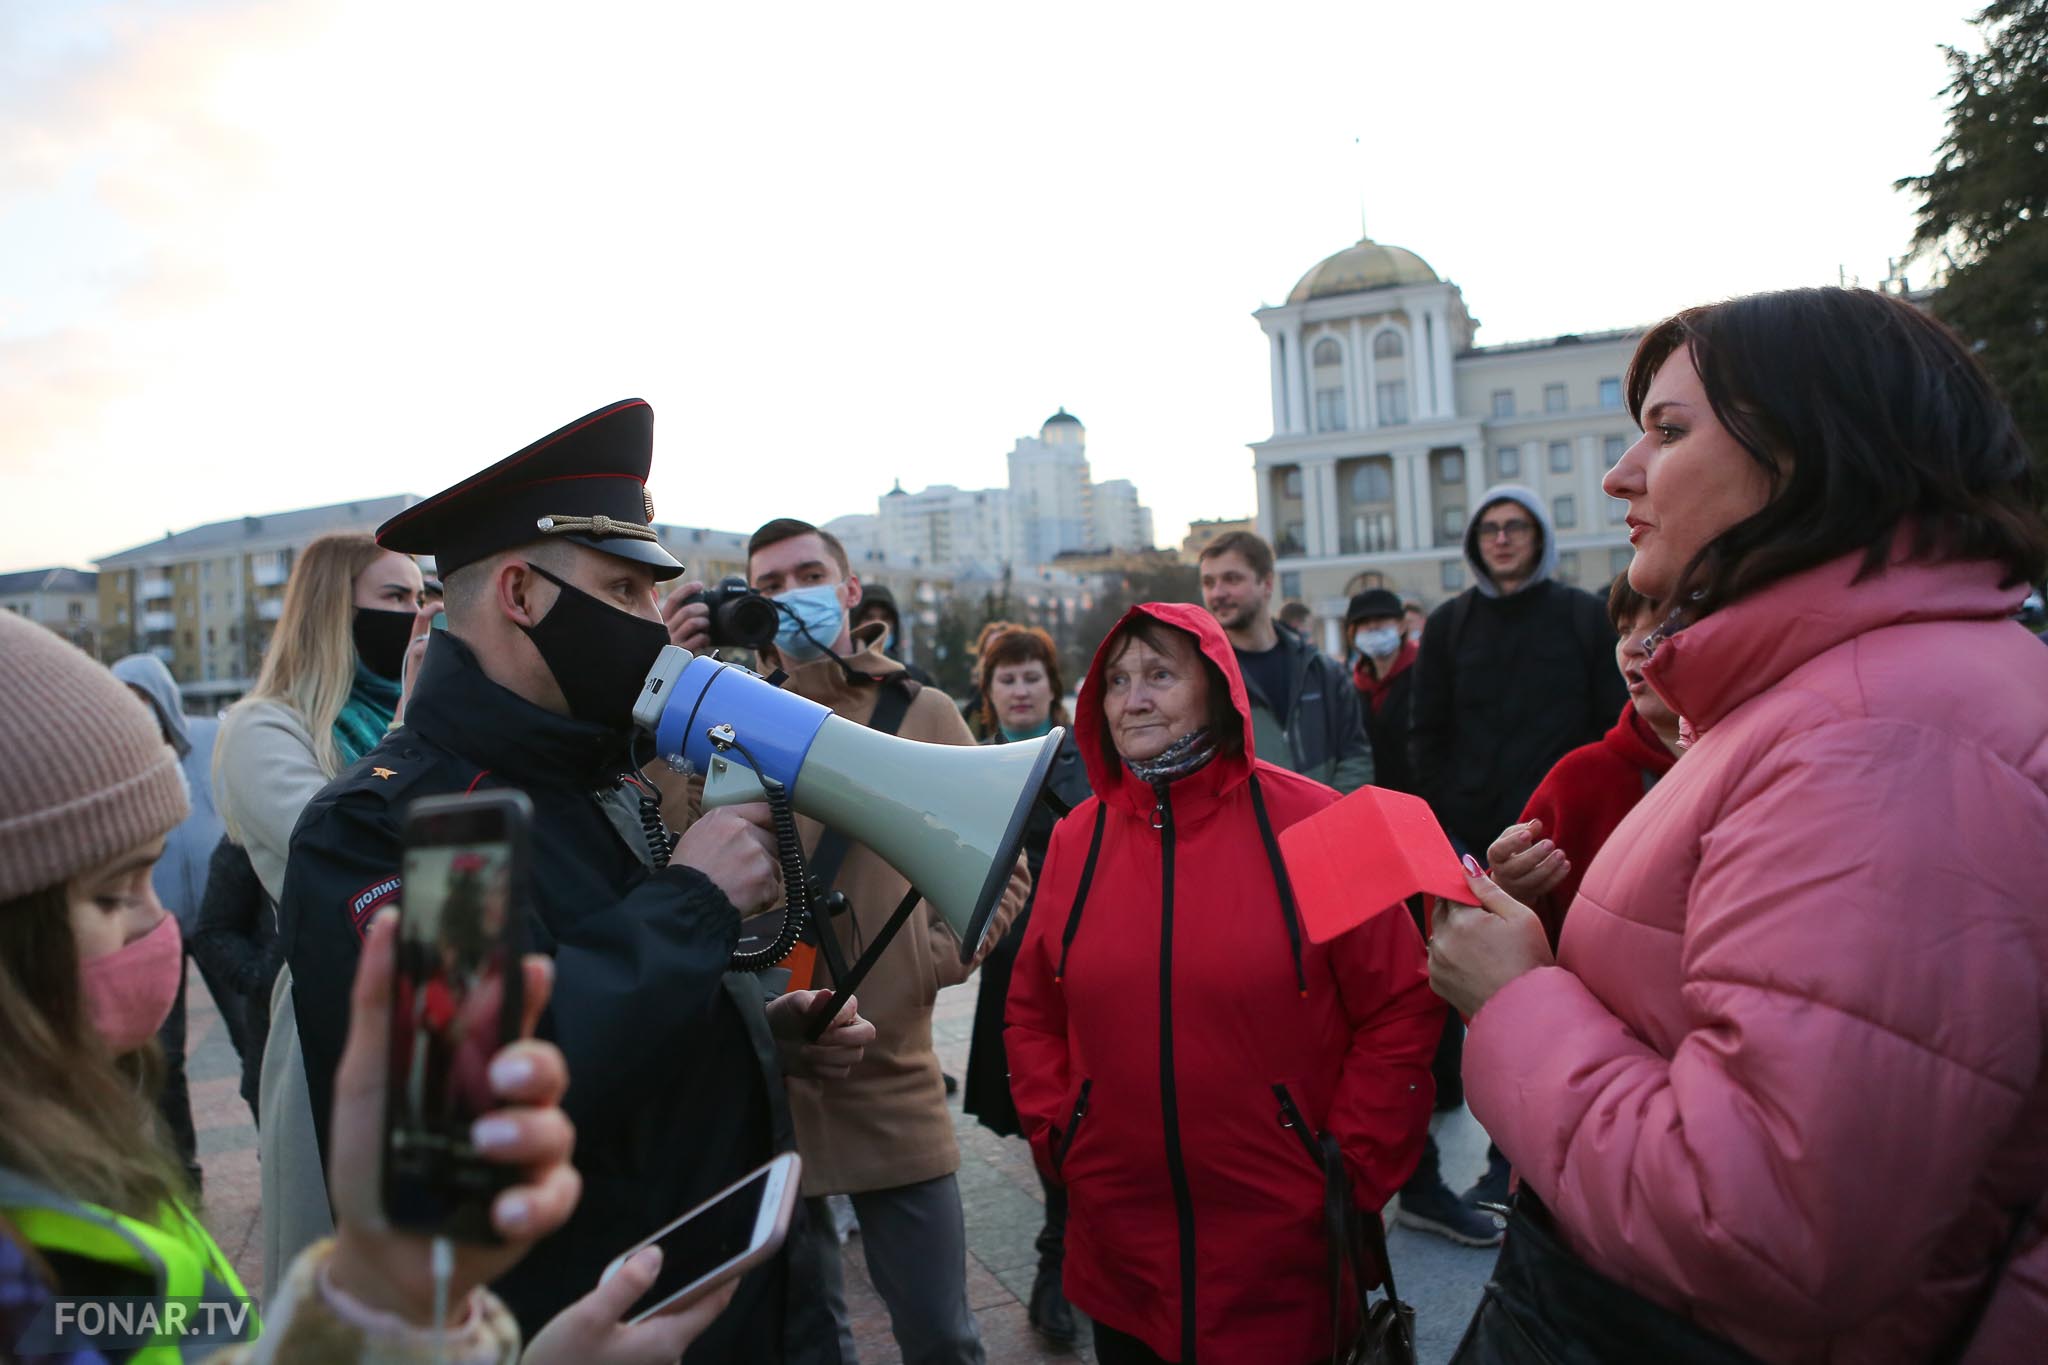 Митинг в Белгороде 21. Торжественный митинг в Белгороде. Вечер 21 апреля. 2 Апреля 2017 Челябинск митинг. Белгород 21 апреля